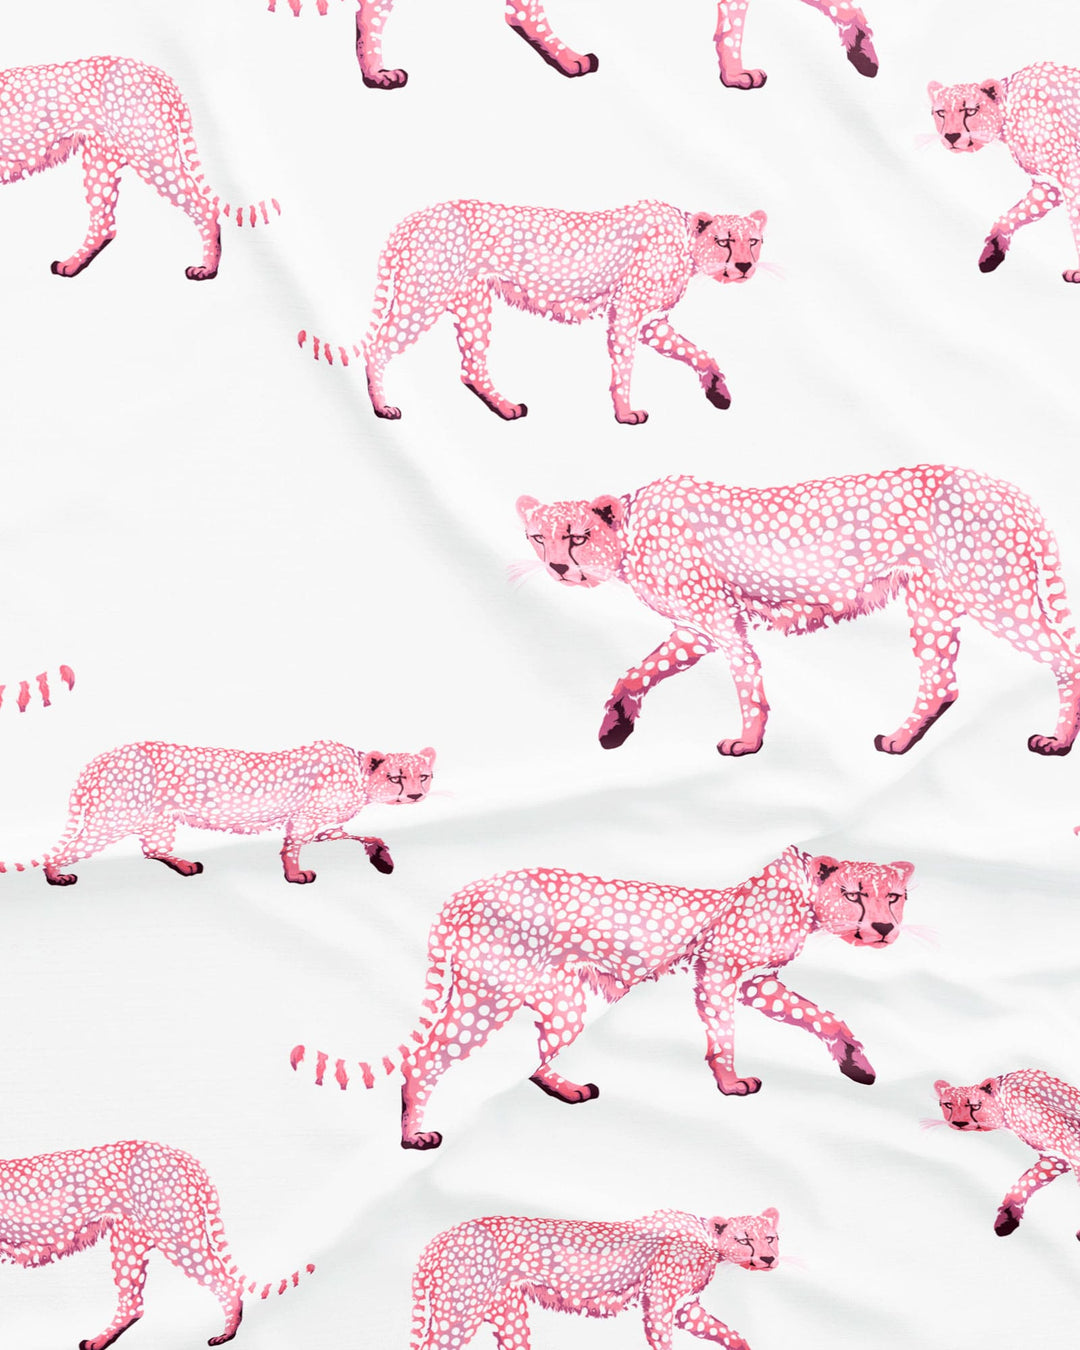 Women's sexy cotton nighty - Pink cheetahs on white